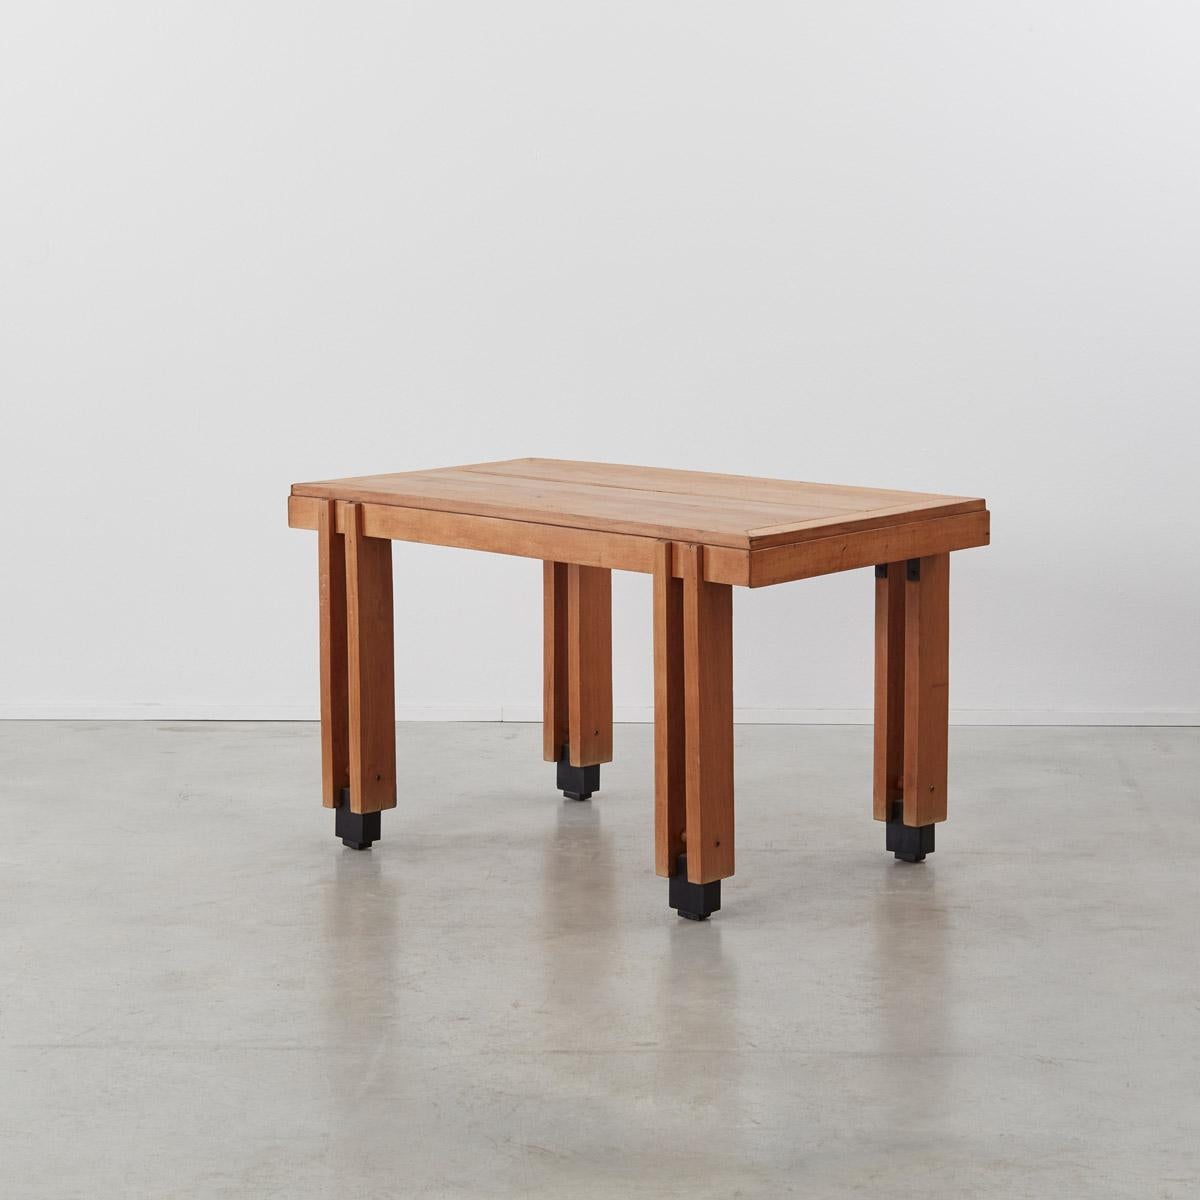 20th Century Constructivist Oak Tables or Desks, Italy, 1950s